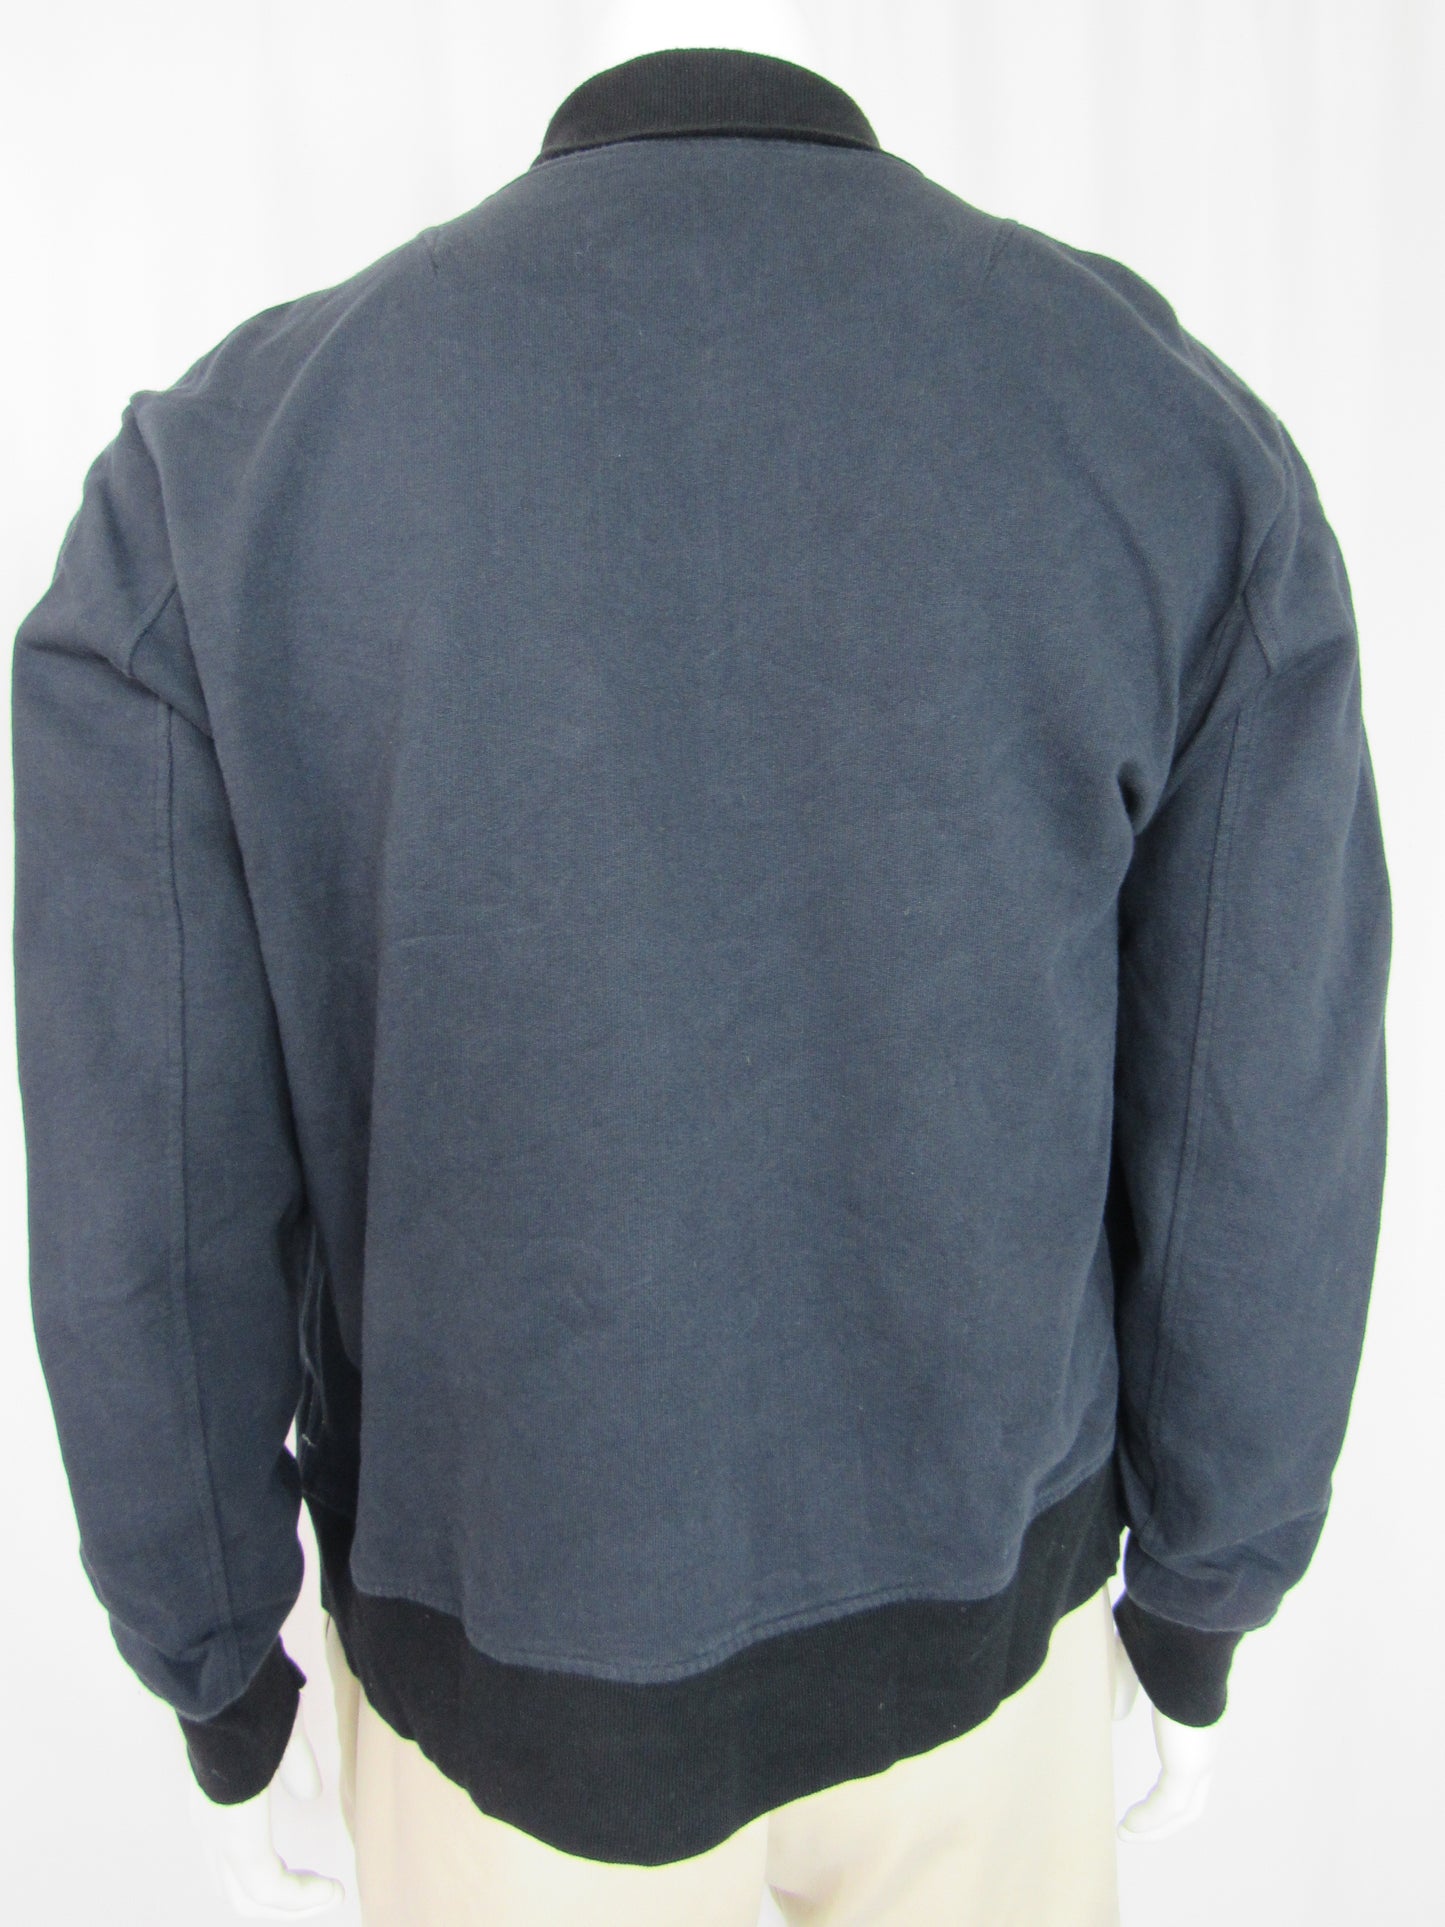 RAG & BONE Jacket - Size XL